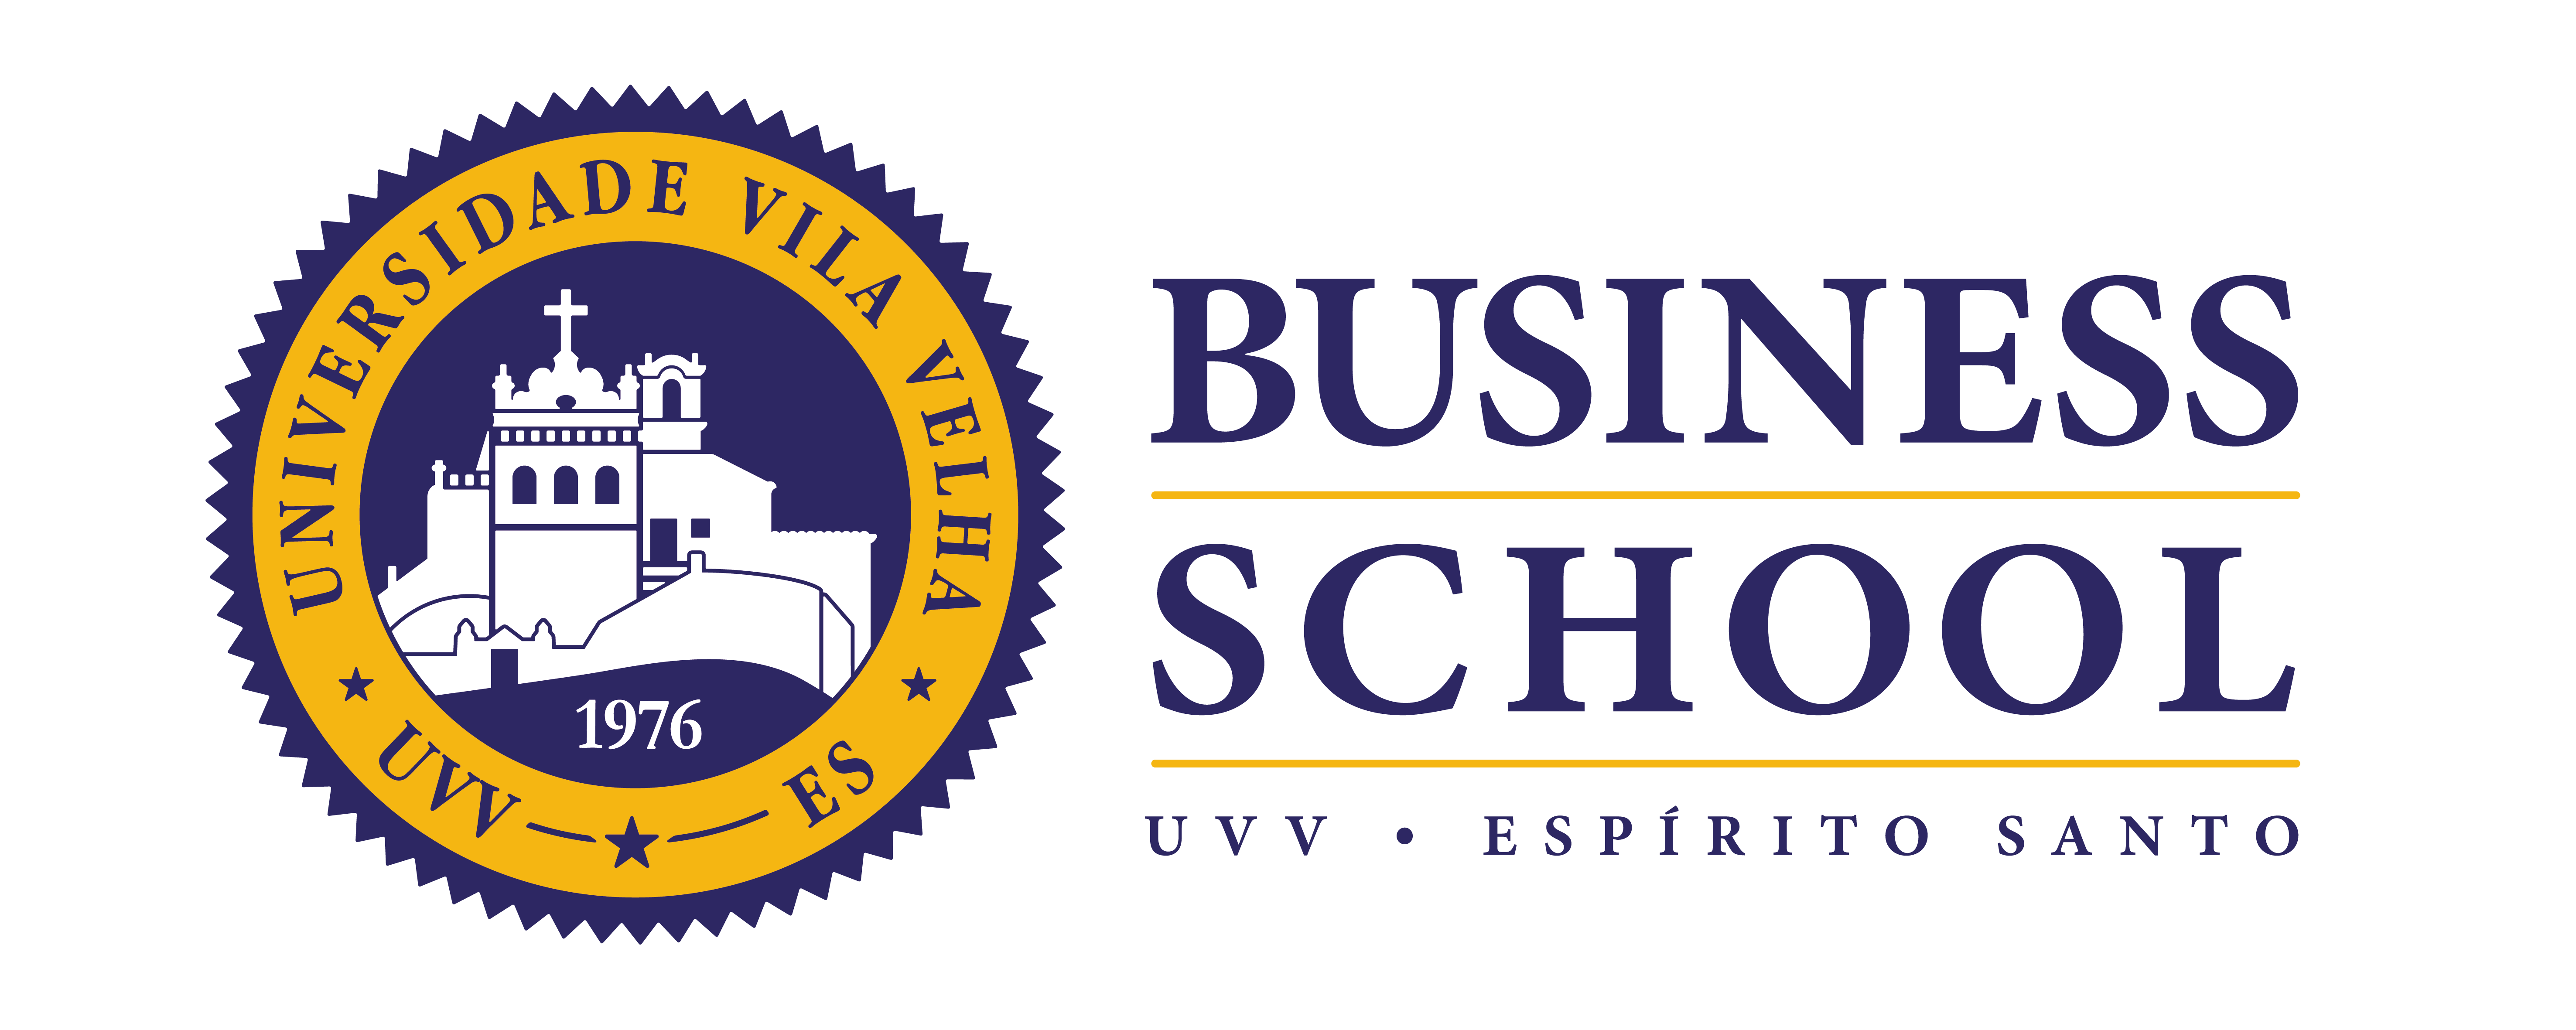 UVV Business School